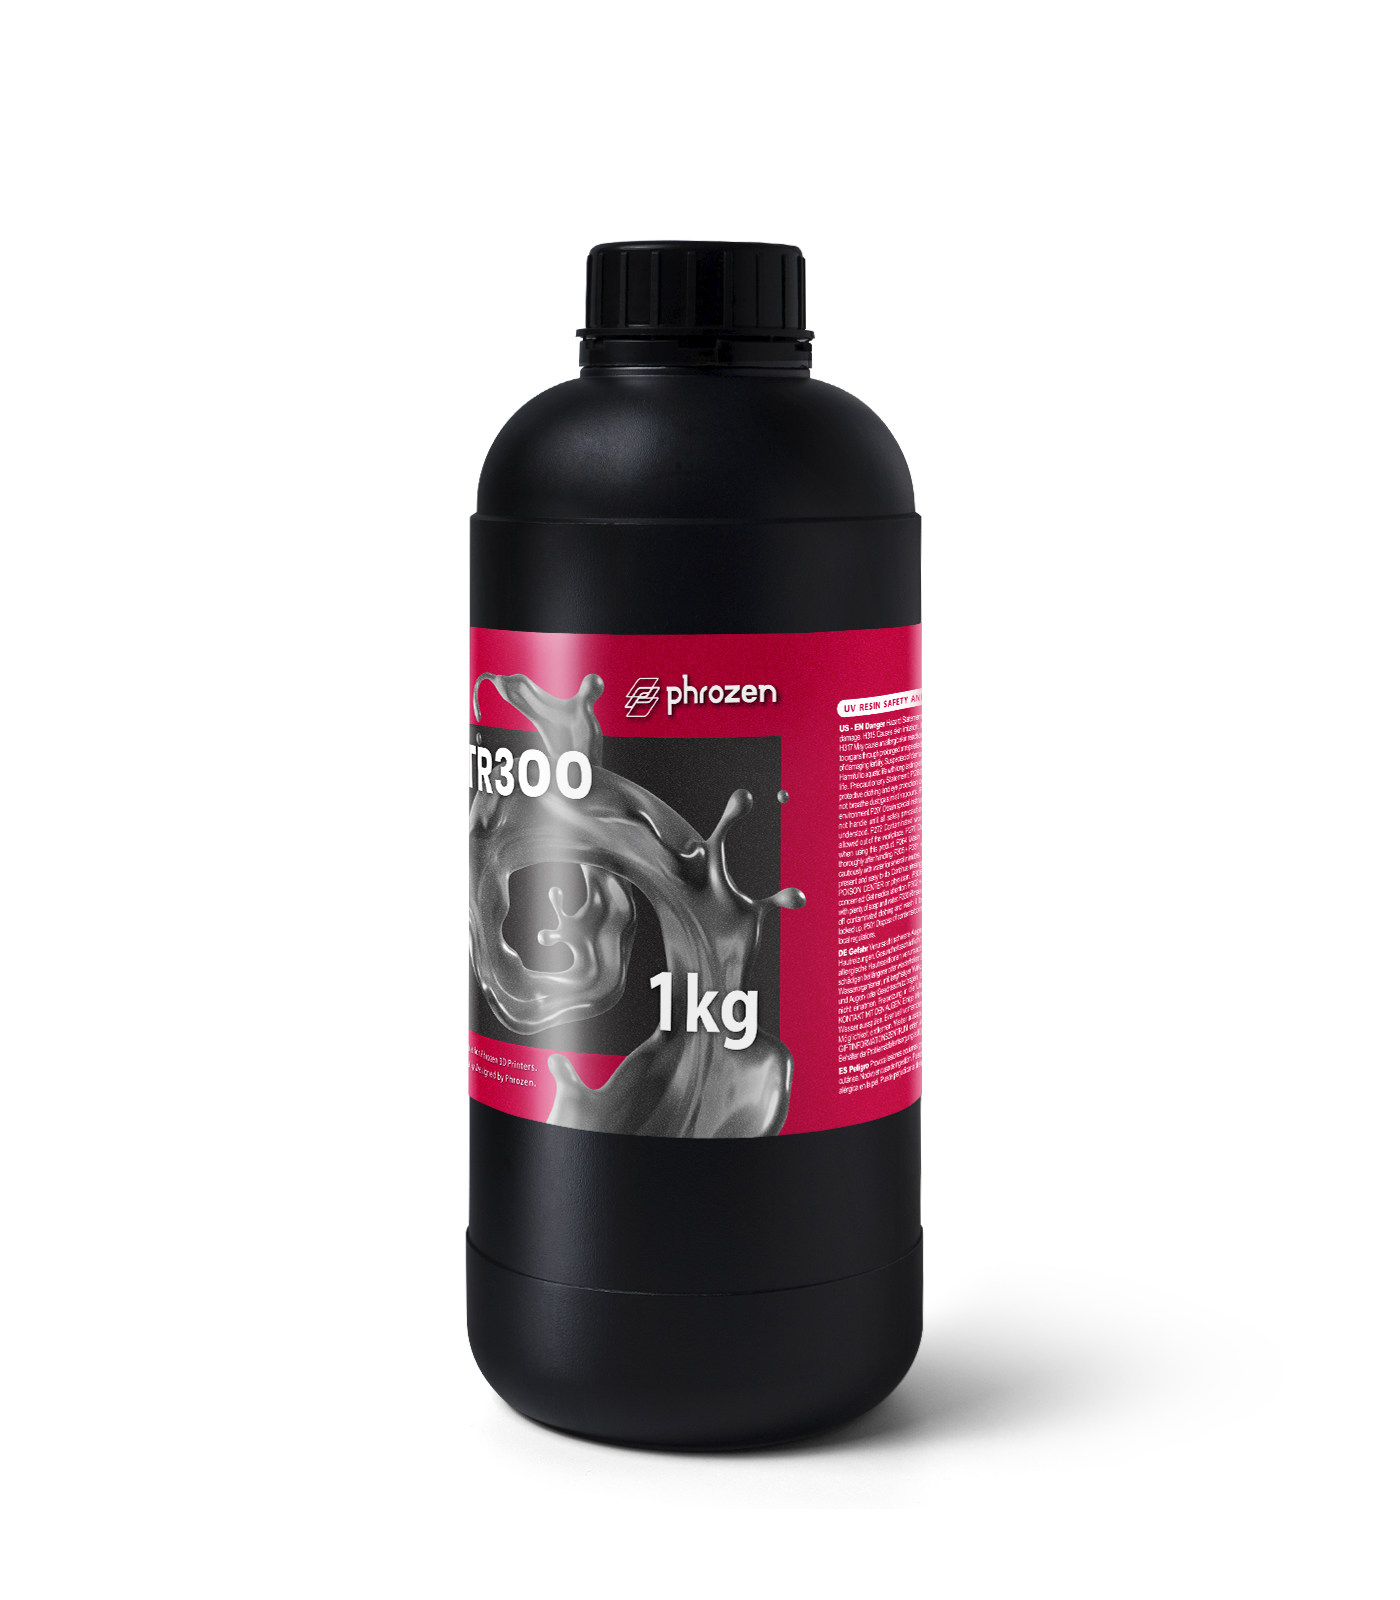 Phrozen TR300 high temperature resin